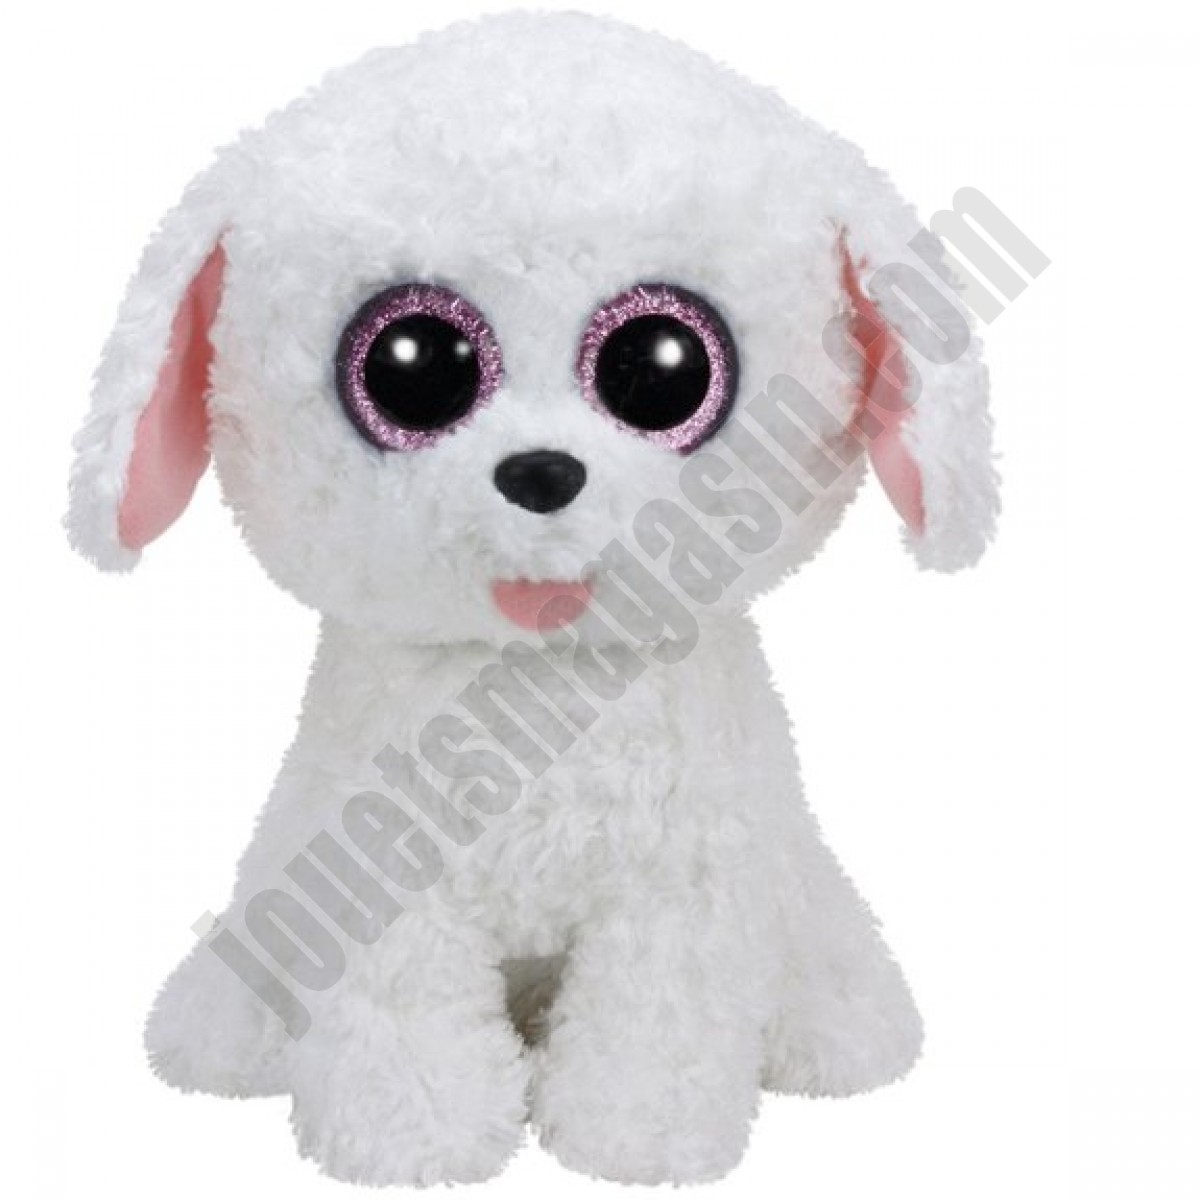 Beanie Boo's : Peluche Pippie le chien 23 cm ◆◆◆ Nouveau - Beanie Boo's : Peluche Pippie le chien 23 cm ◆◆◆ Nouveau